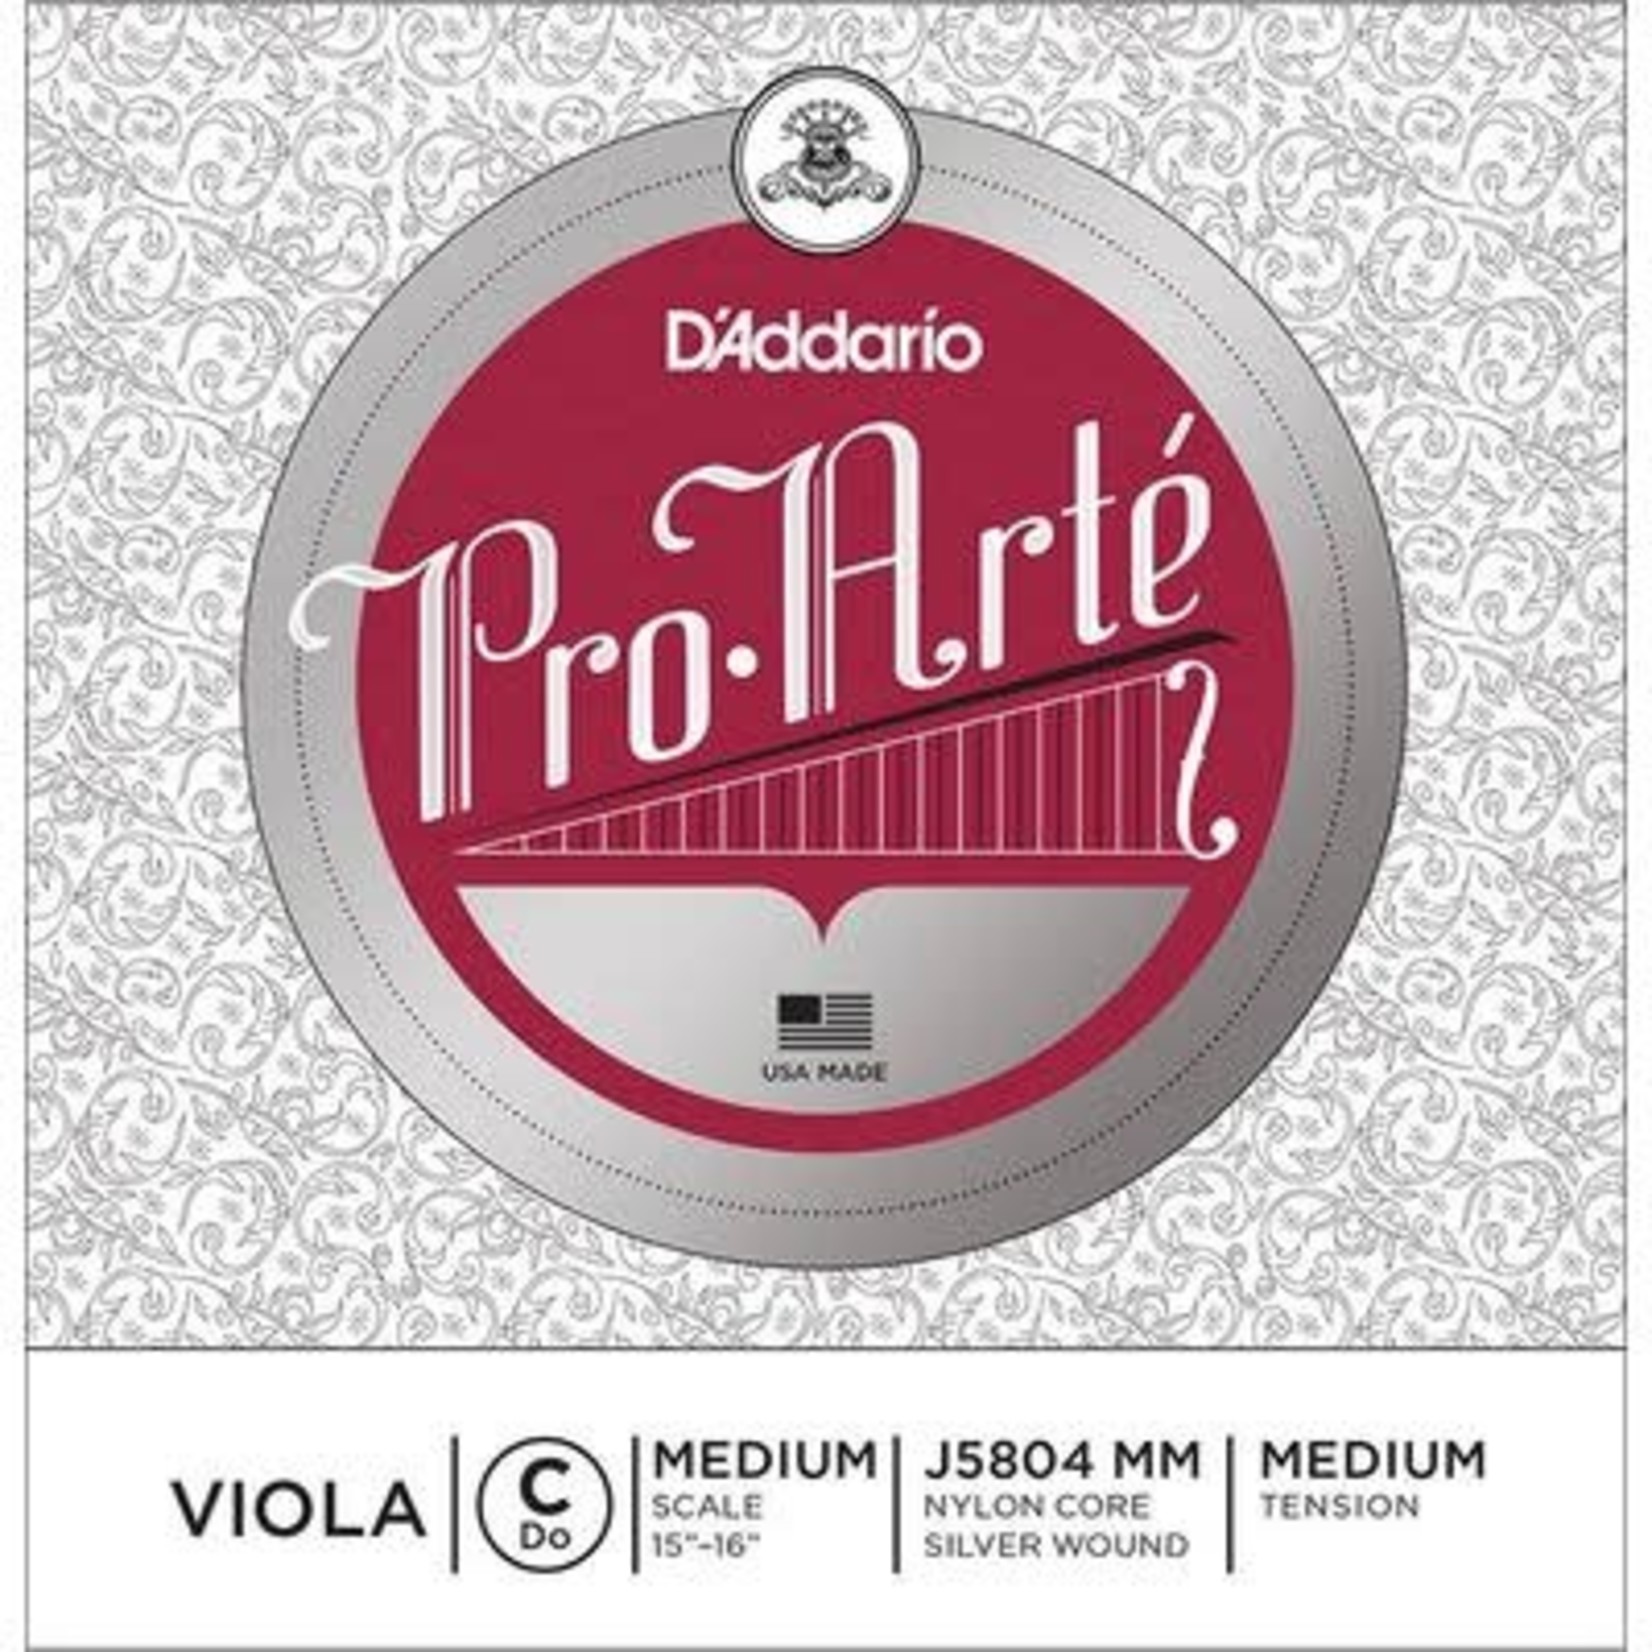 DADDARIO Pro Arte snaar voor altviool, do (C-4) 15-16, medium, silver